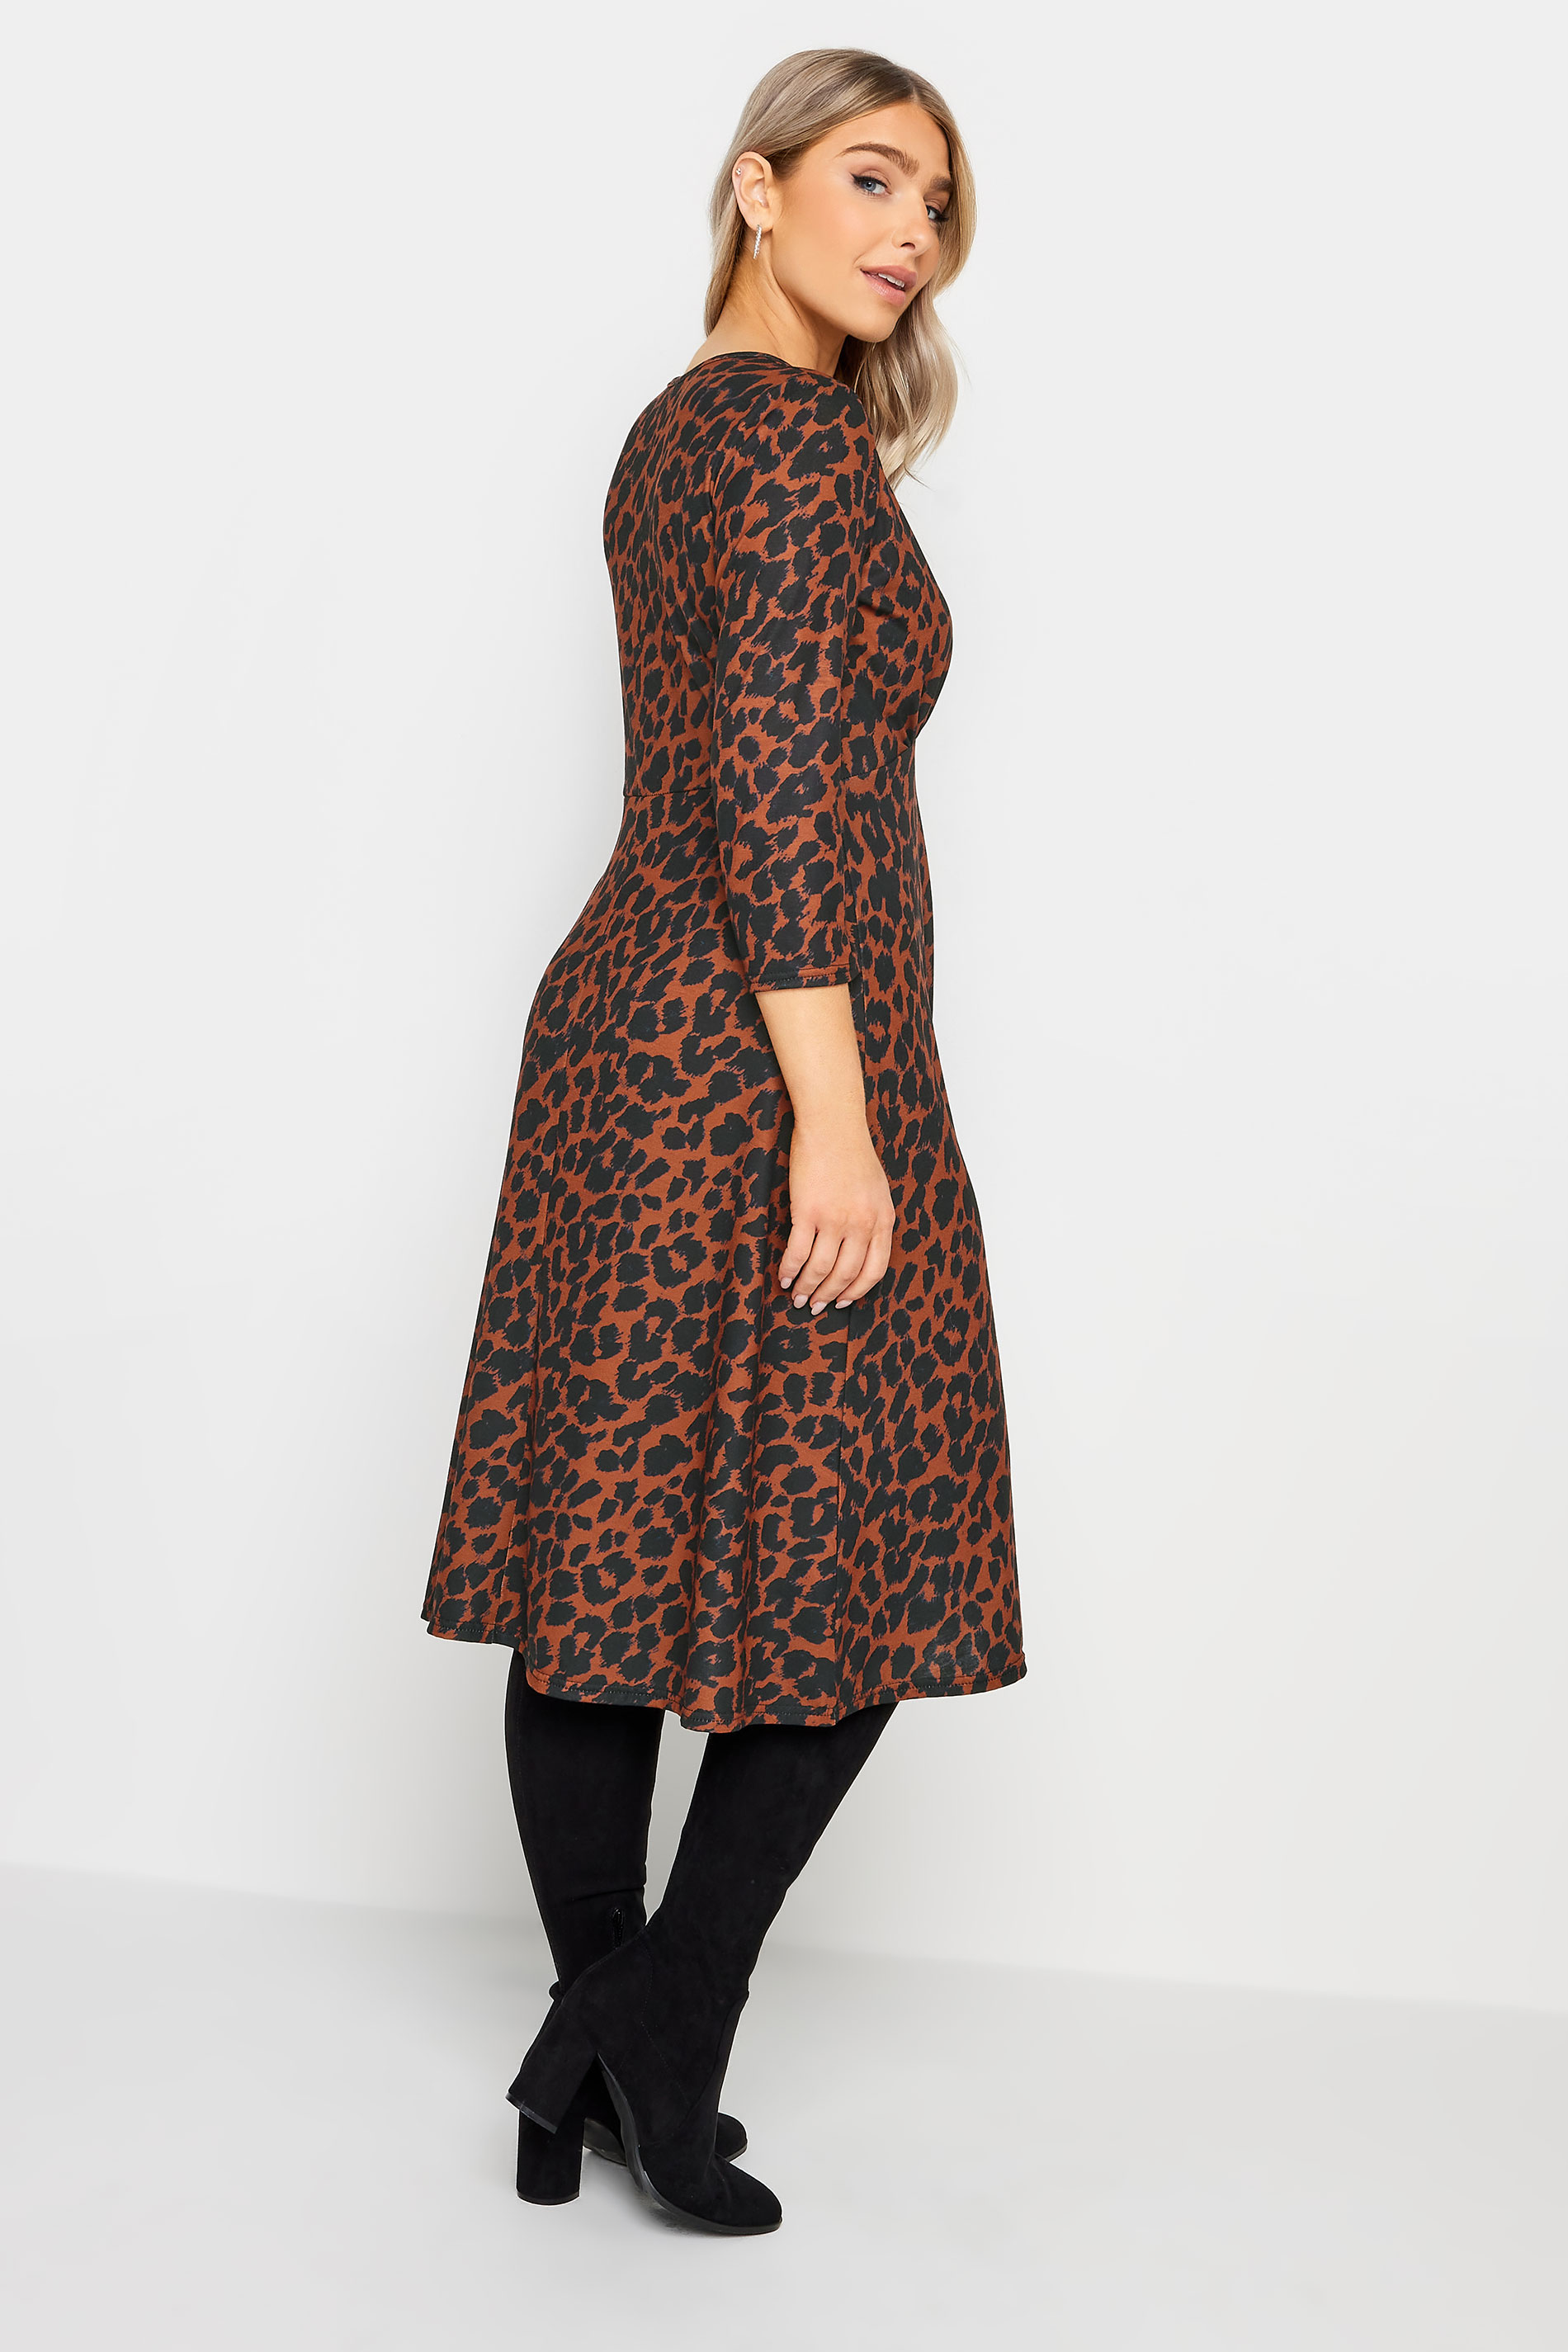 M&Co Brown Leopard Print Midaxi Dress | M&Co 3